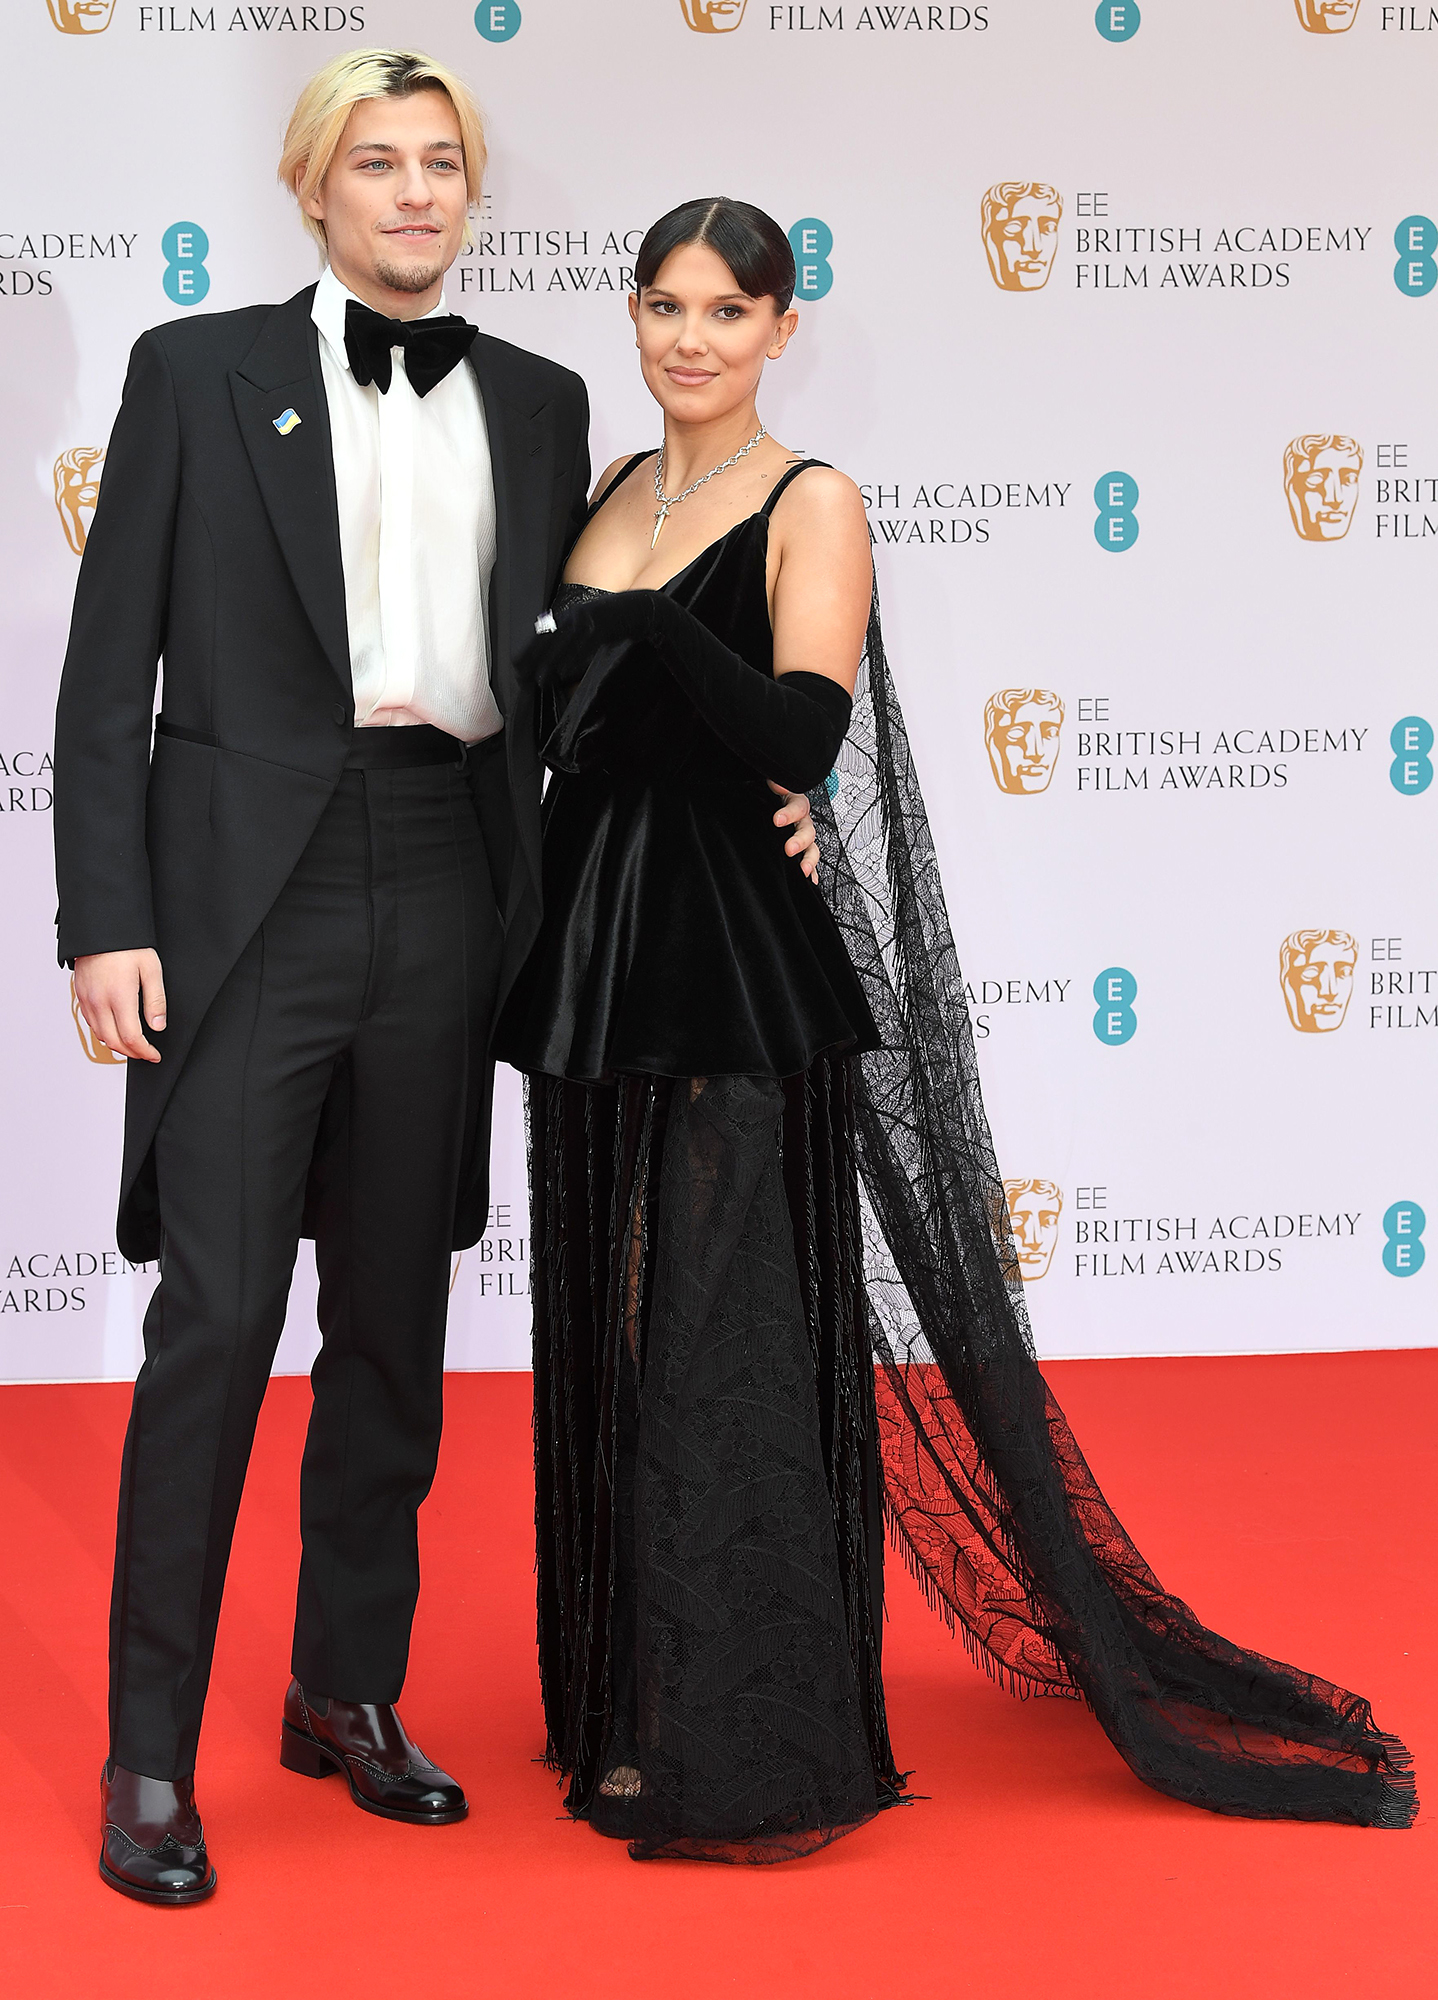 Millie Bobby Brown Attends The BAFTAs 2022 With Boyfriend Jake Bongiovi